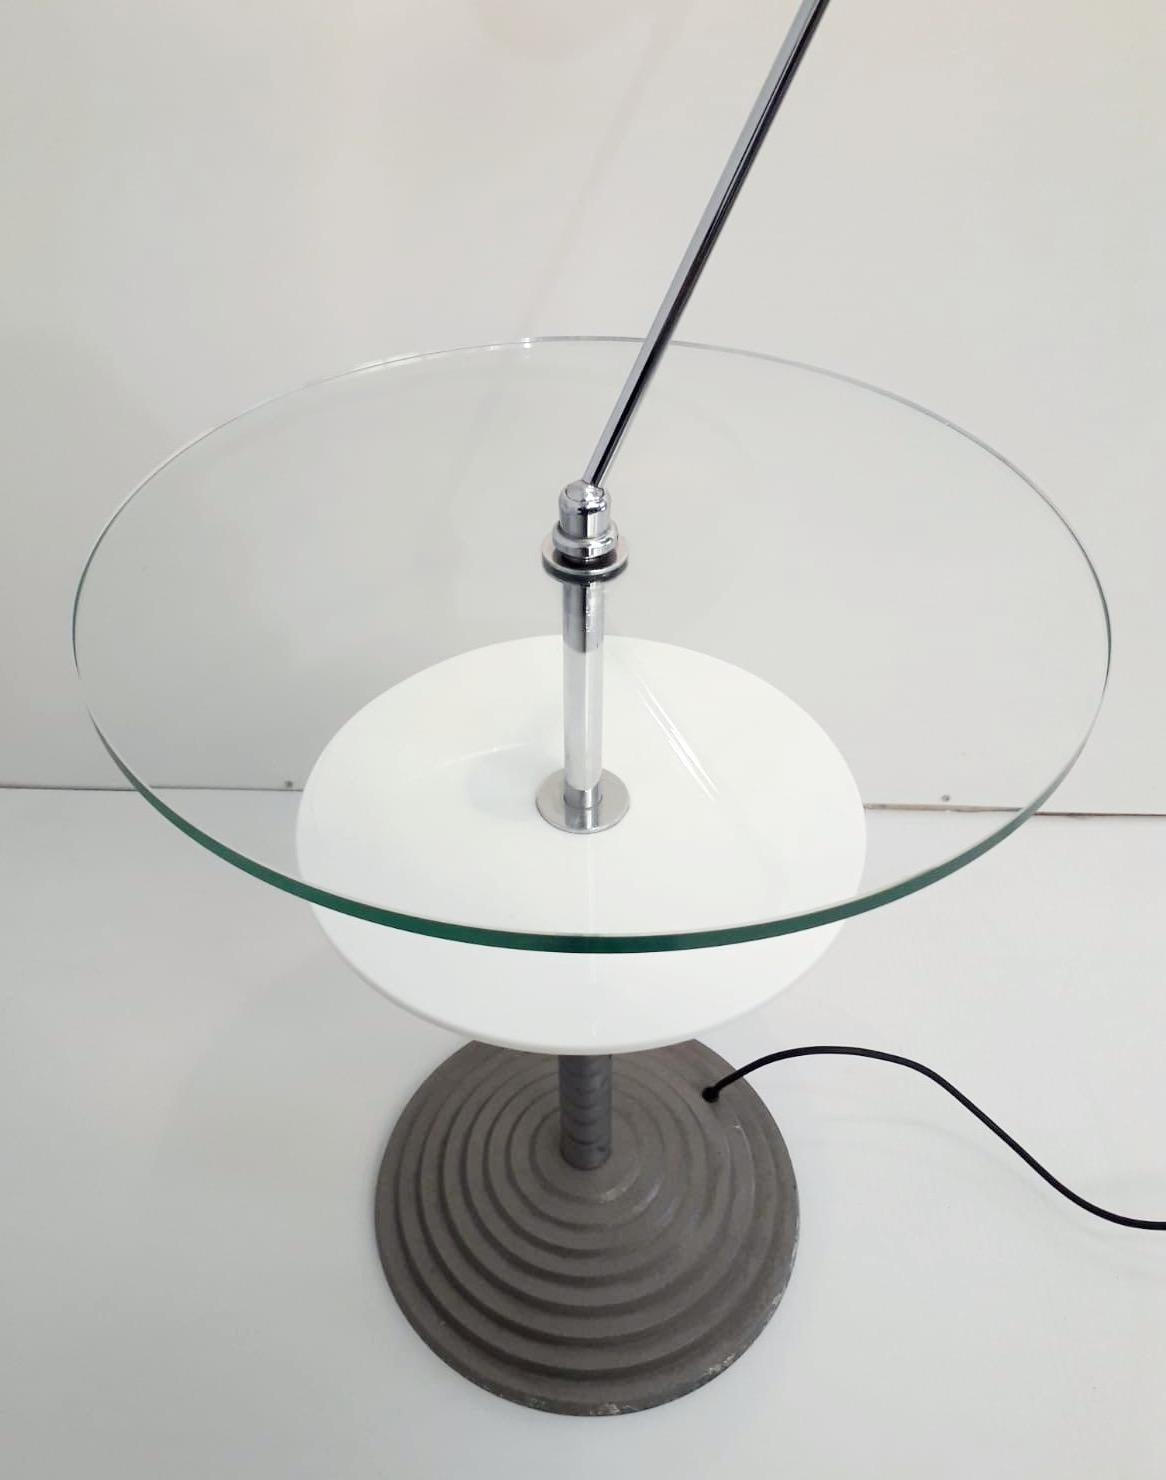 Rare Pair of Lamp Tables by Fontana Arte 1